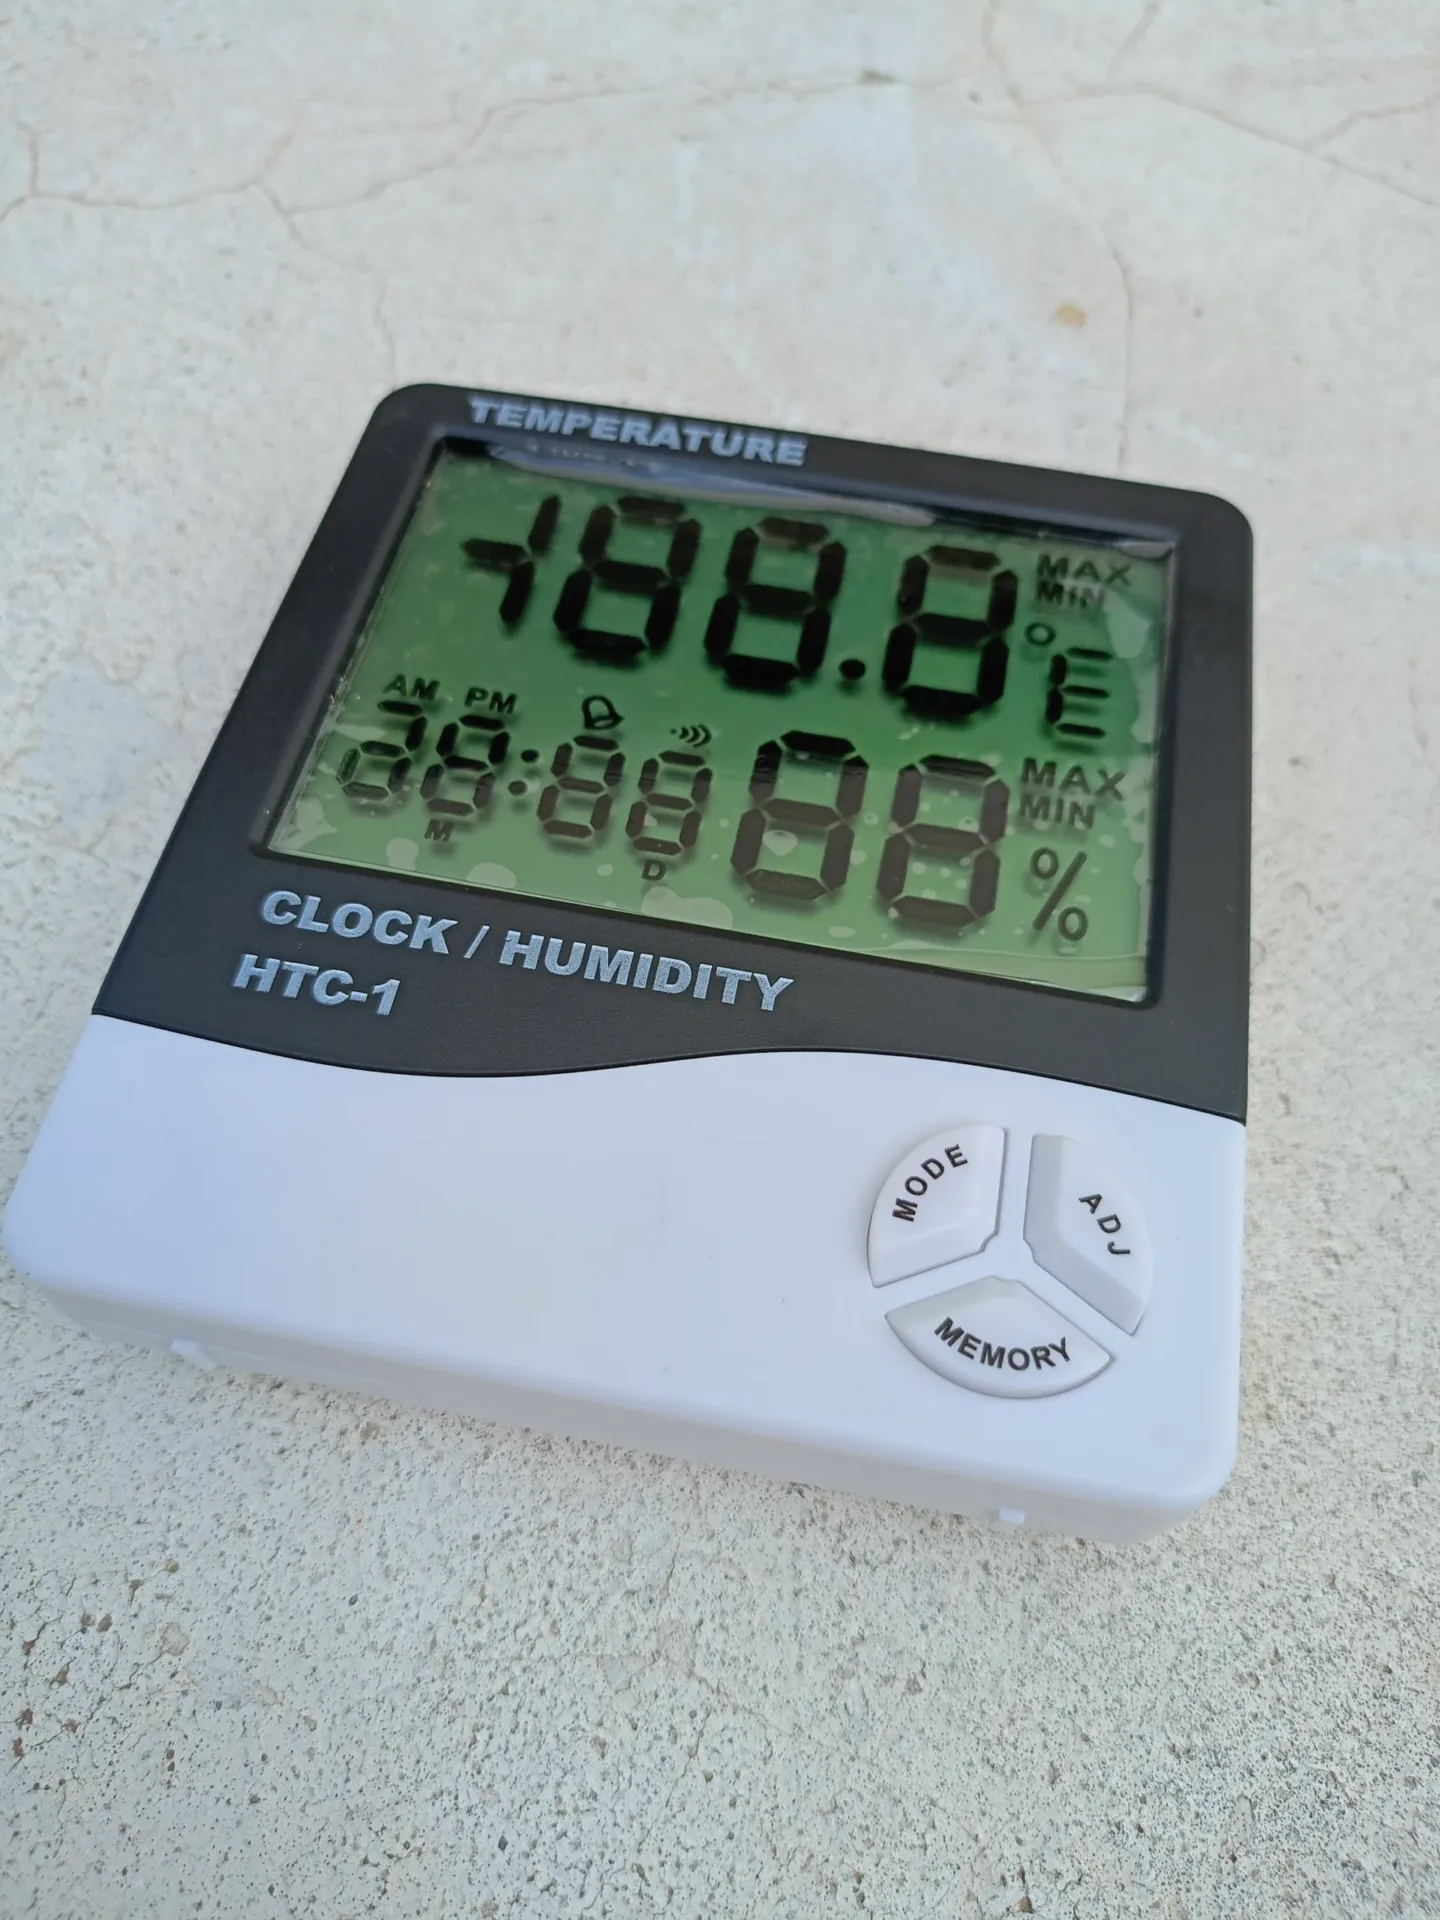 Temperature Humidity Meter Hygrometer